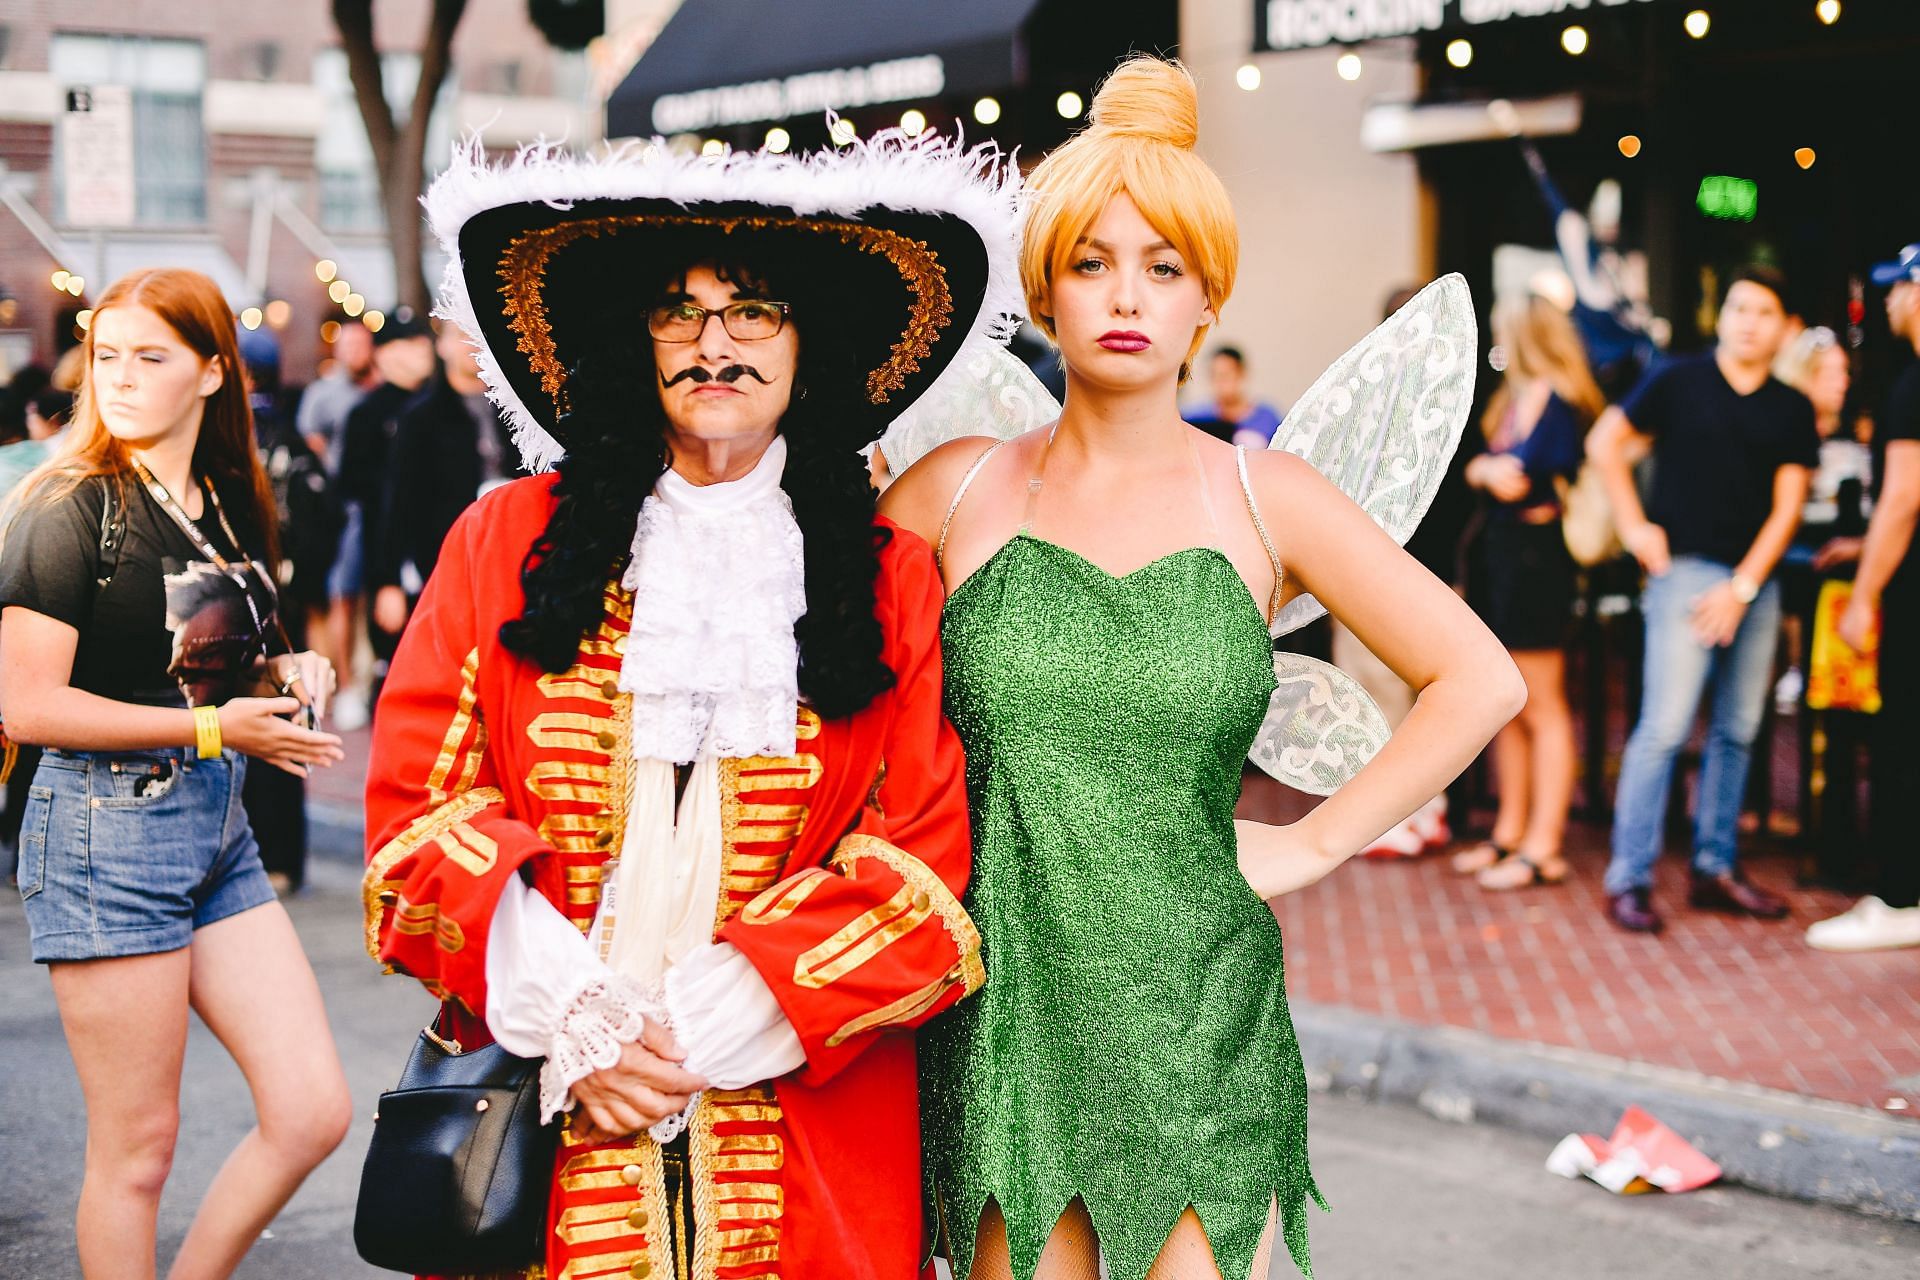 Cosplayers dressed as Hook and Tinker Bell (Image via Getty/Matt Winkelmeyer)